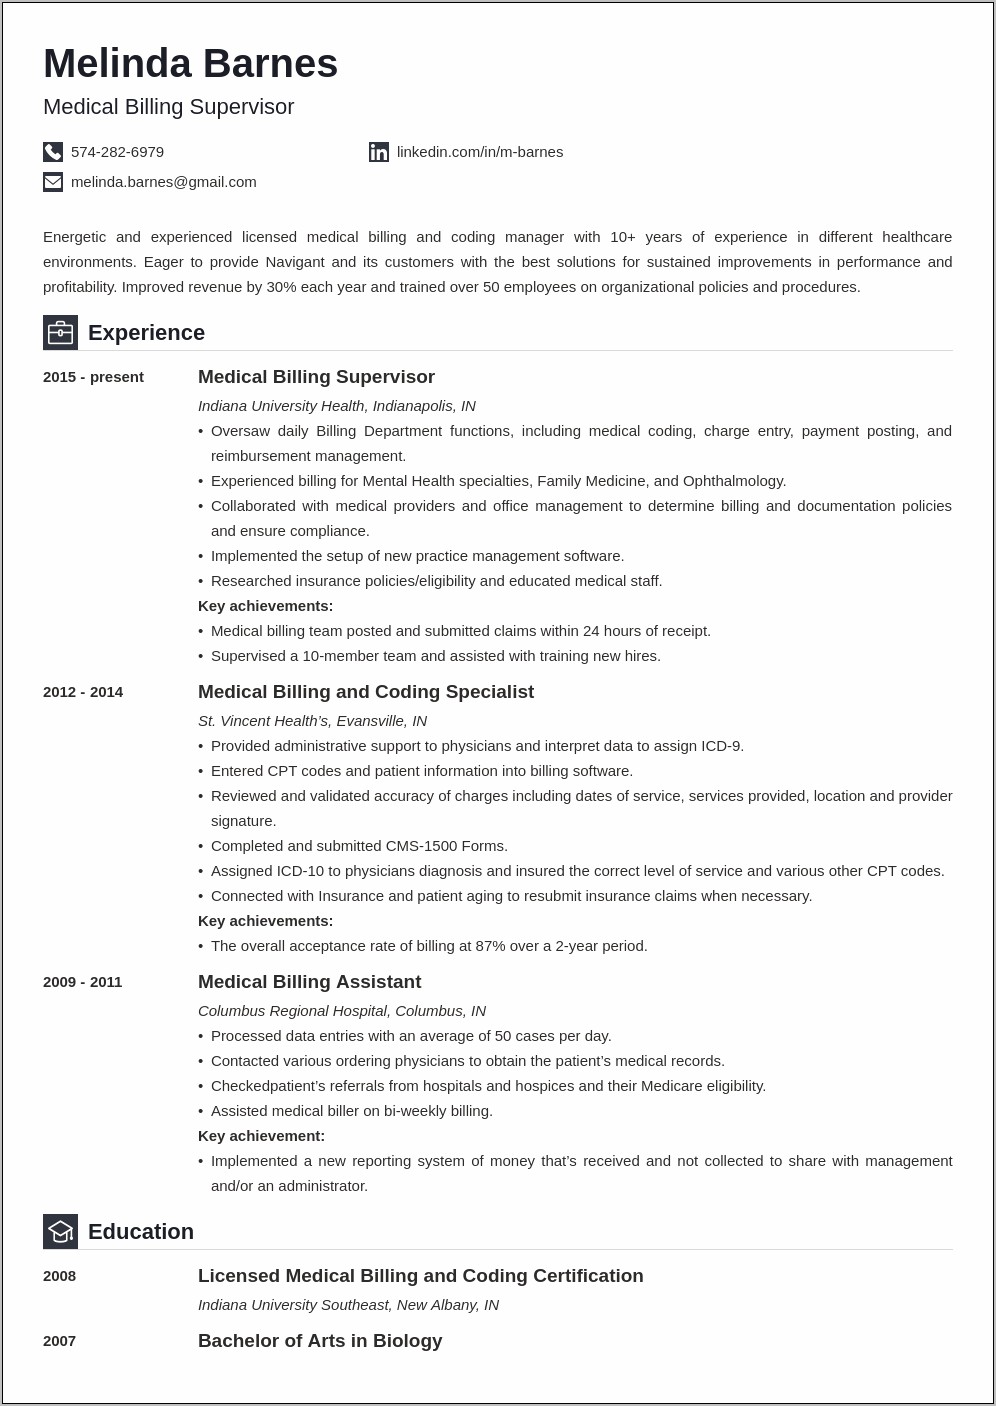 Sample Resume Mental Health Quality Assurance Job Description